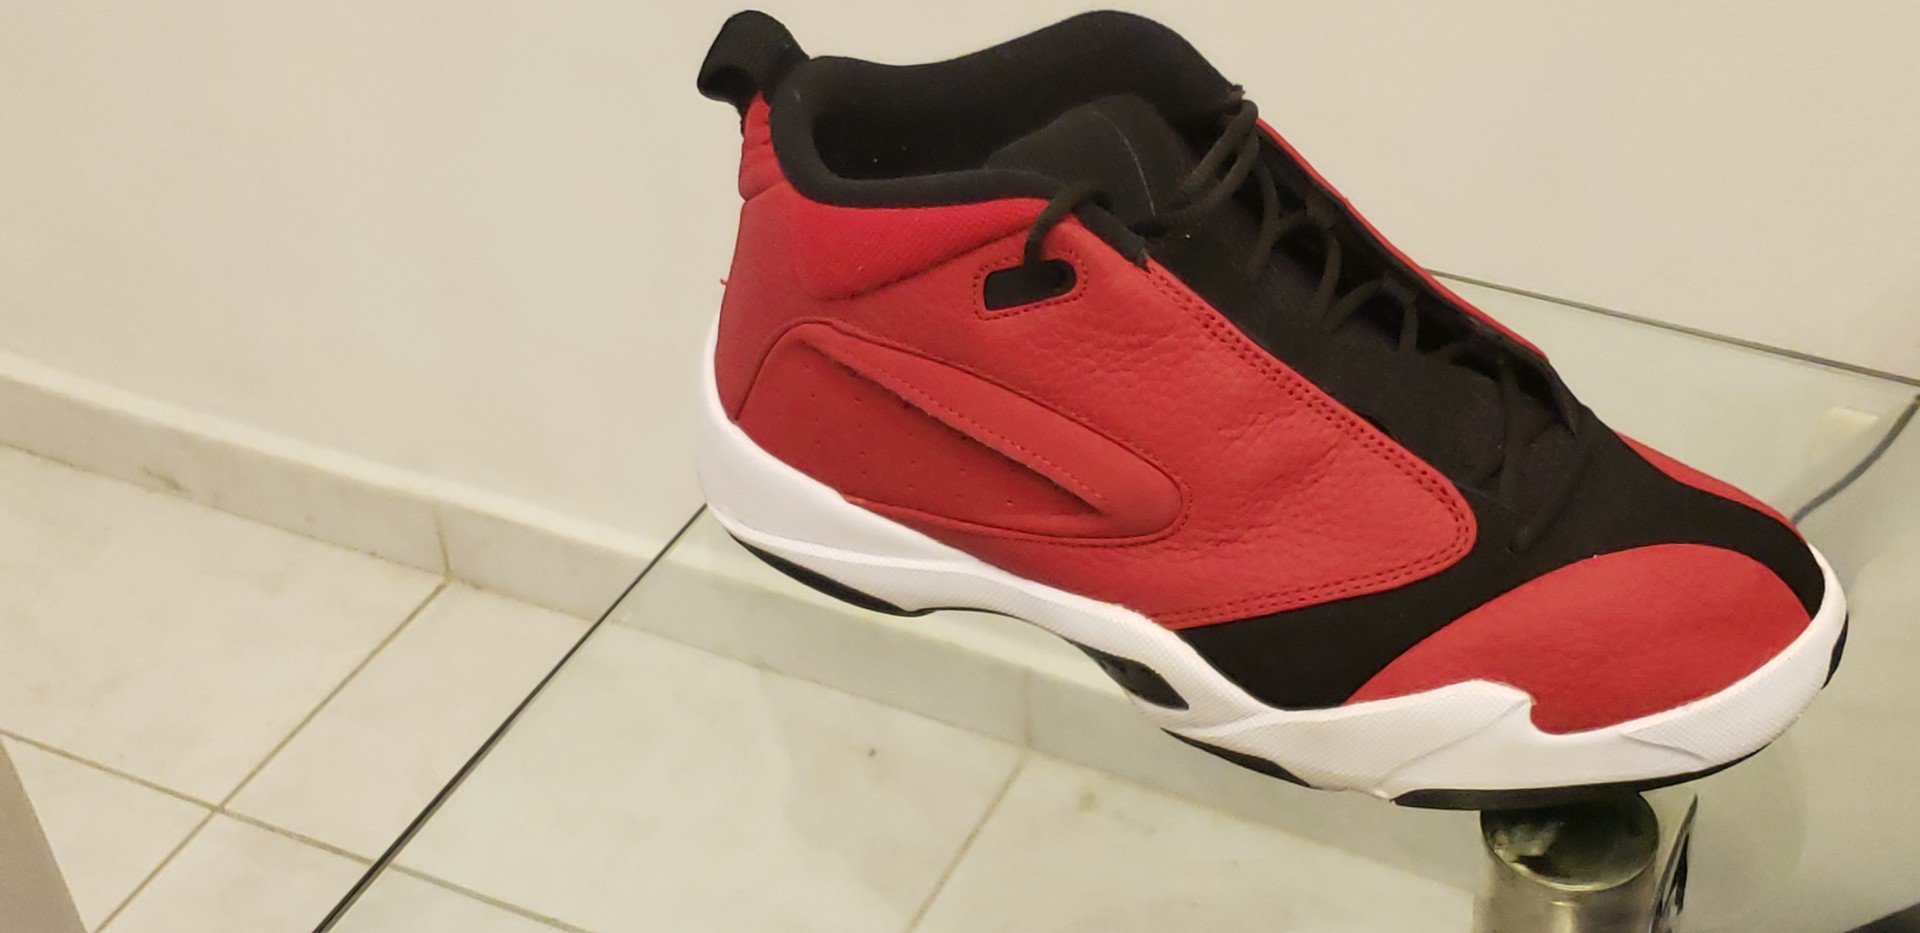 zapatos para hombre - Vendo Tenis Jordan Jumpman 23 original 3500 pesos